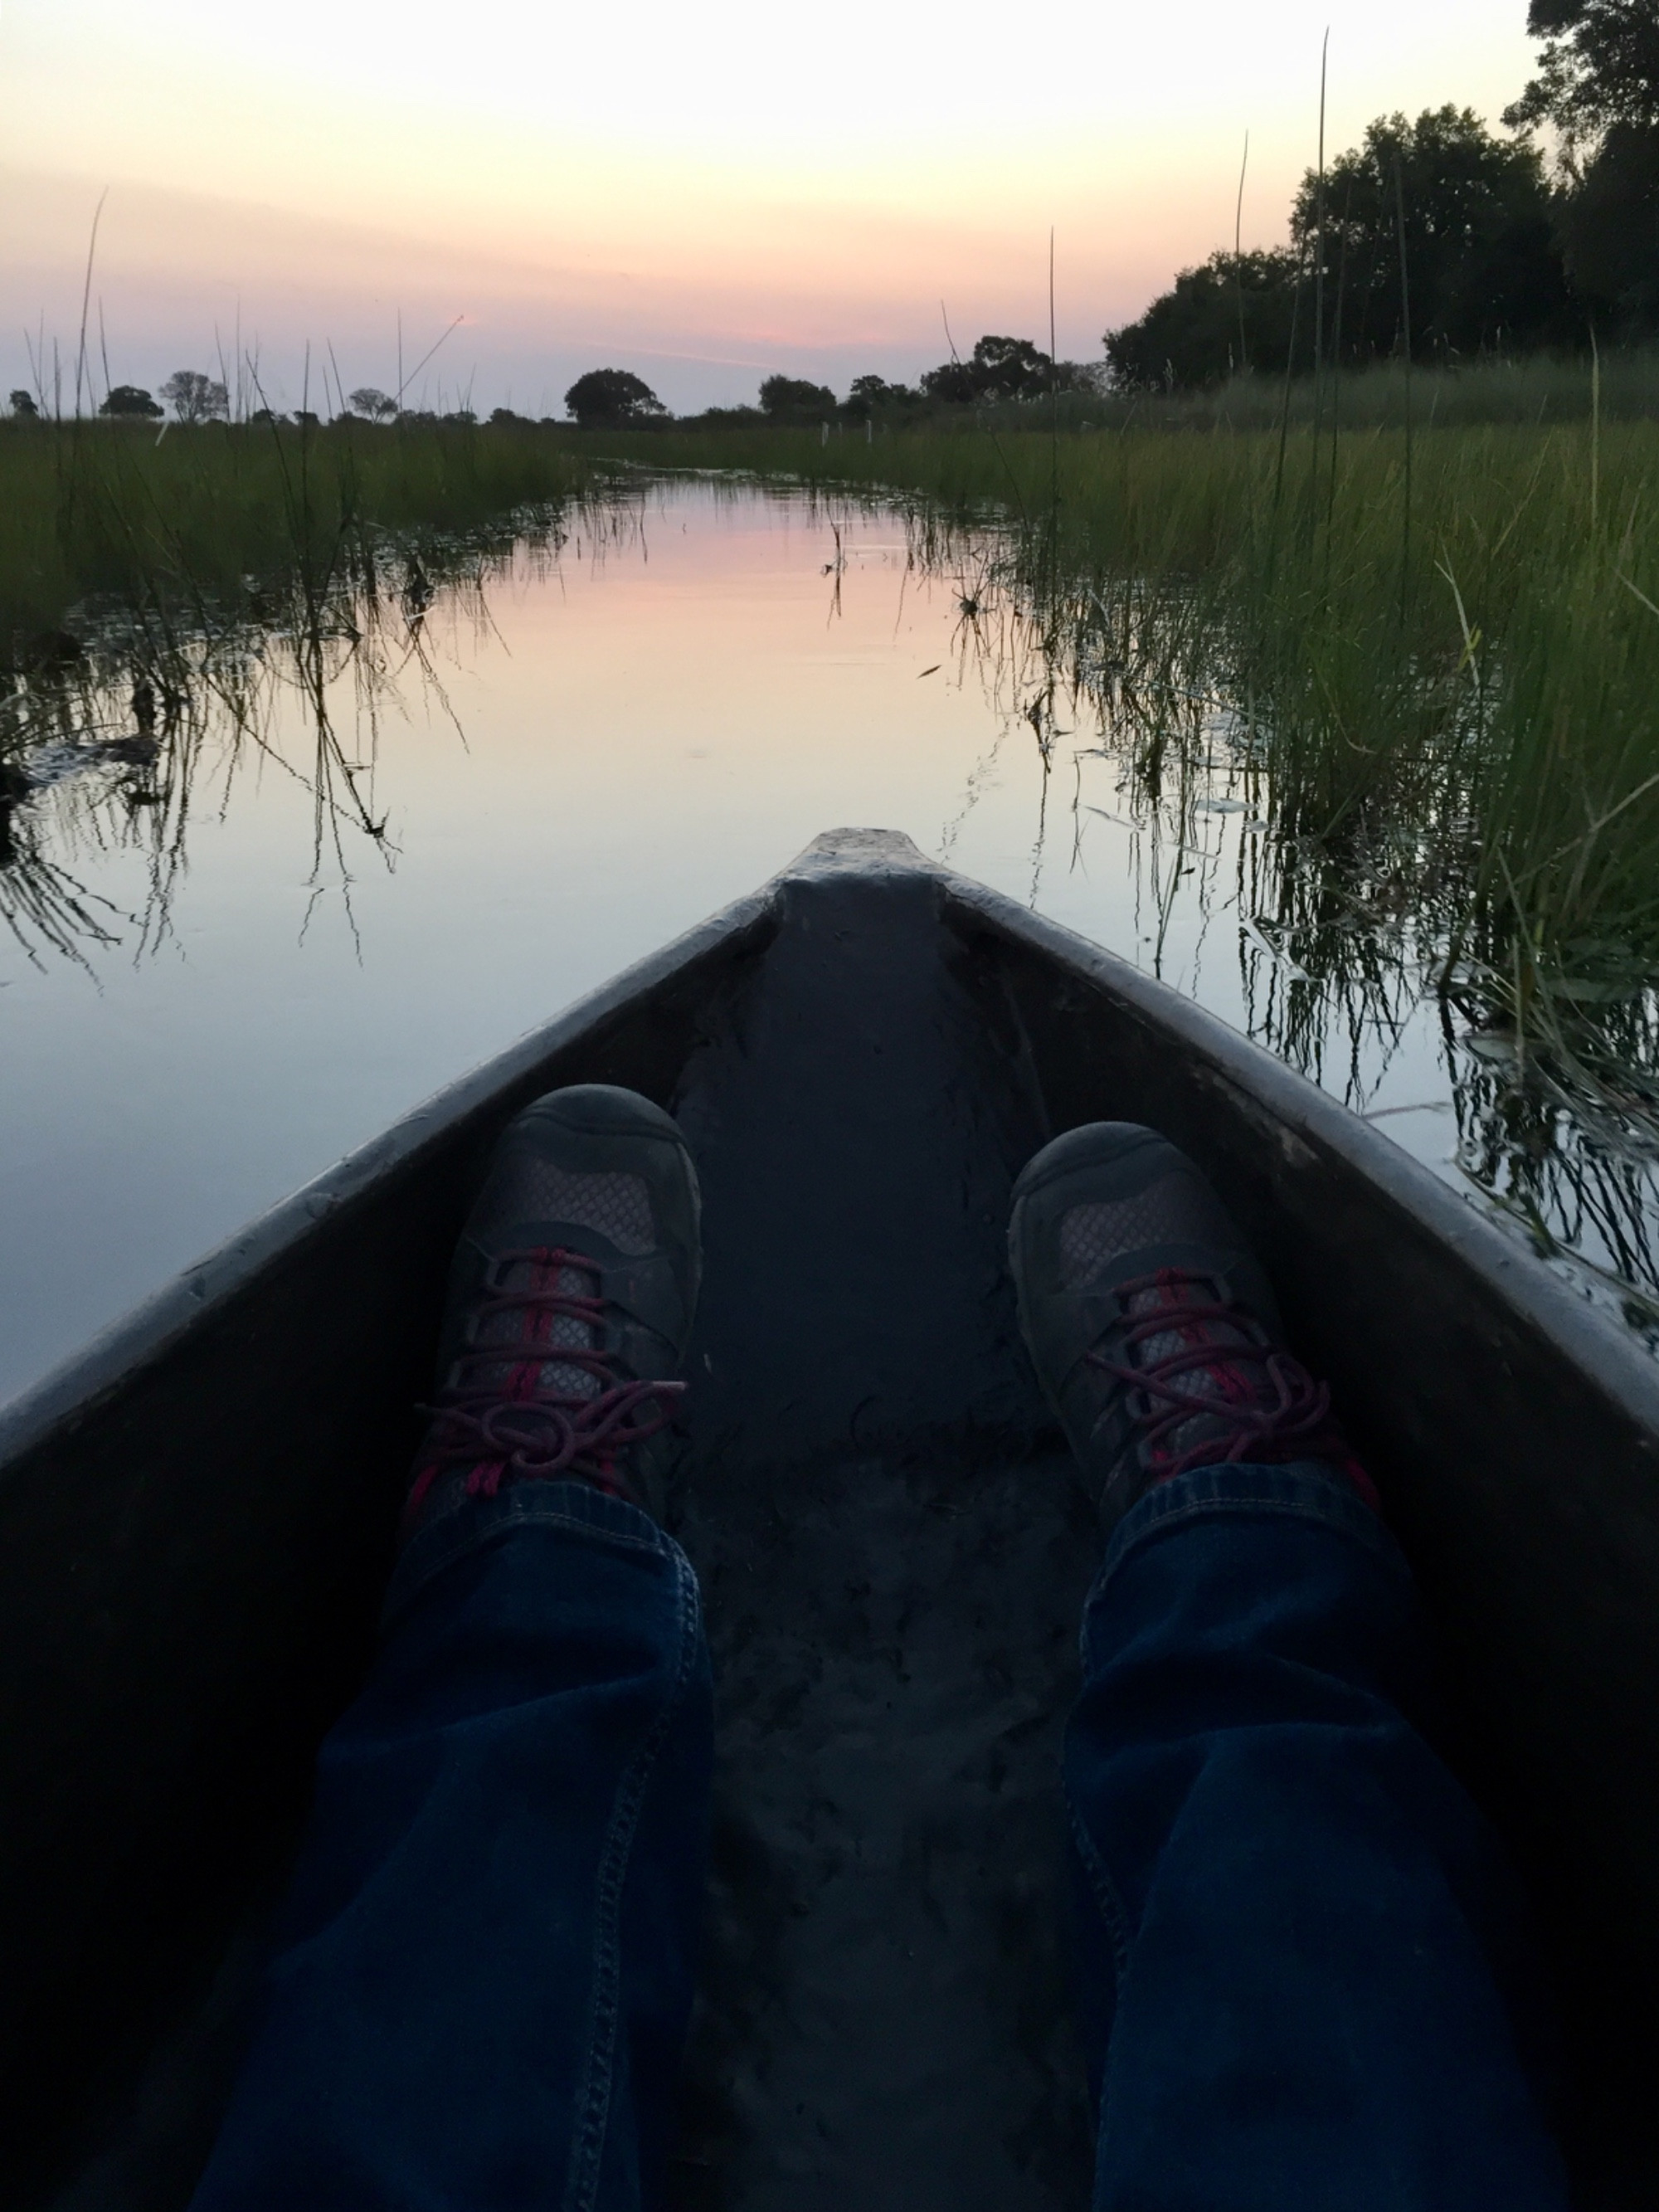 On a mokoro in the Okavango delta. 